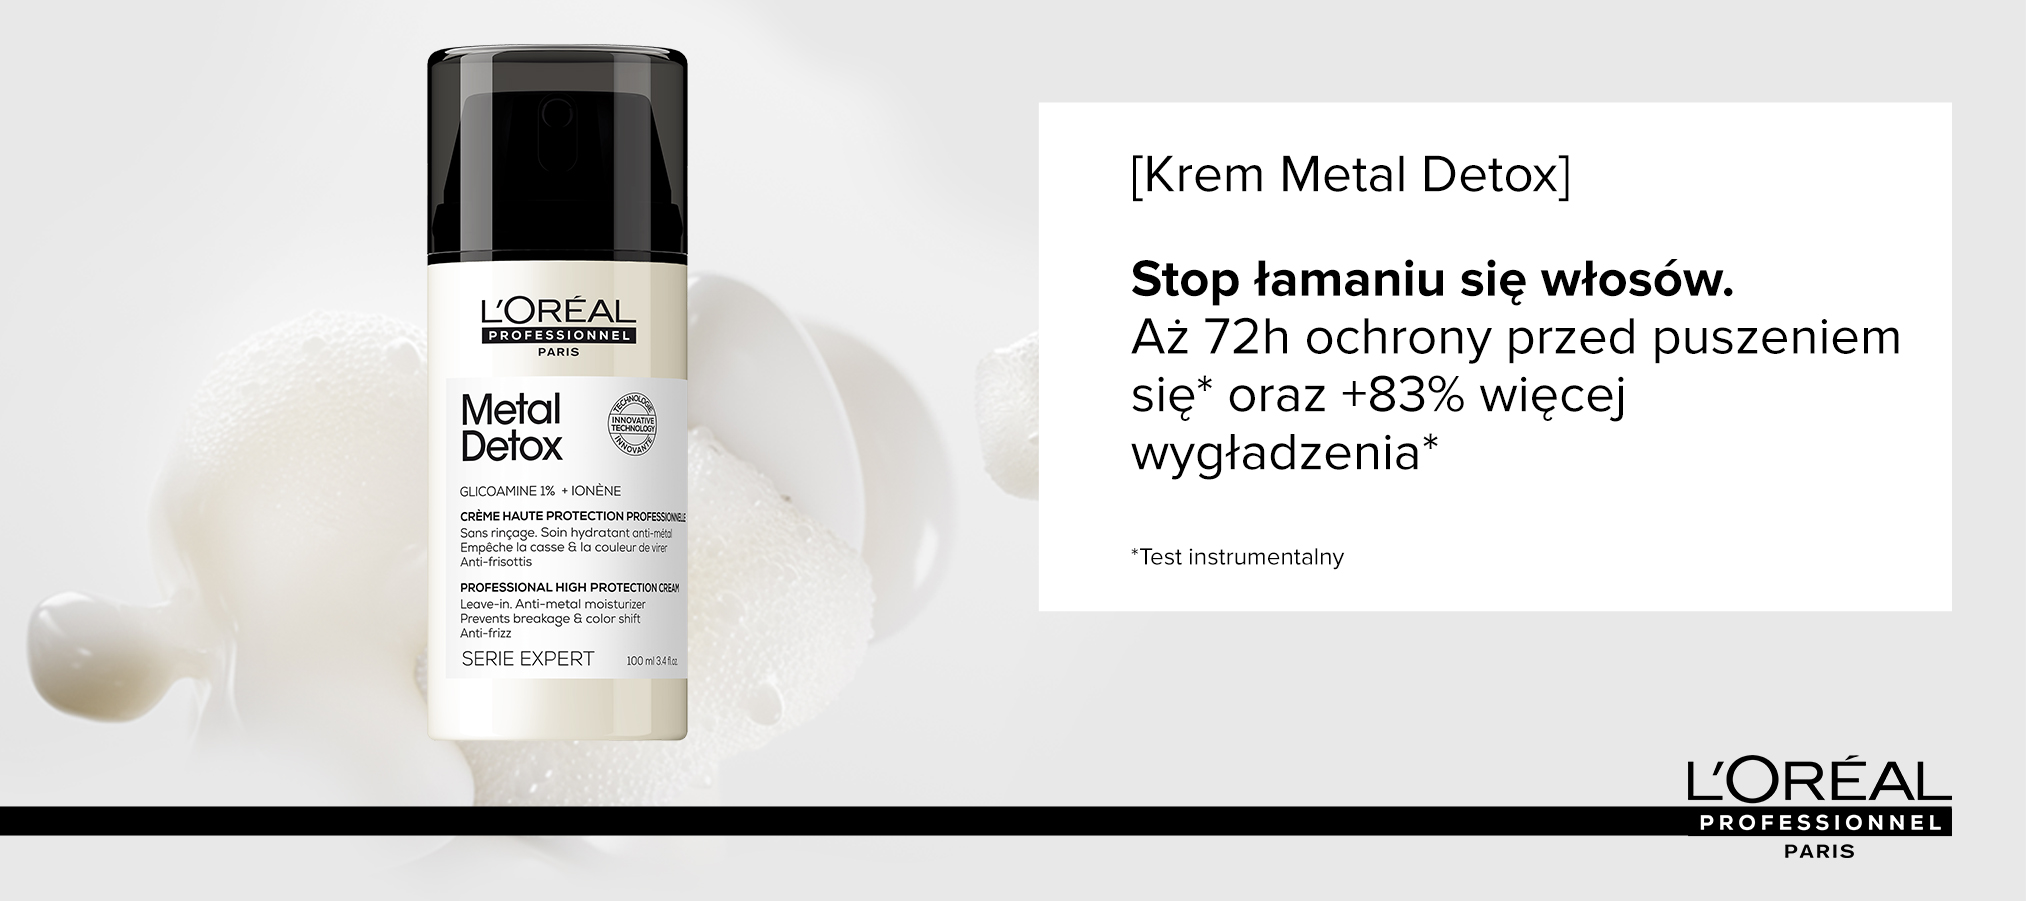 L'Oreal Professionnel Metal Detox Professional High Protection Cream